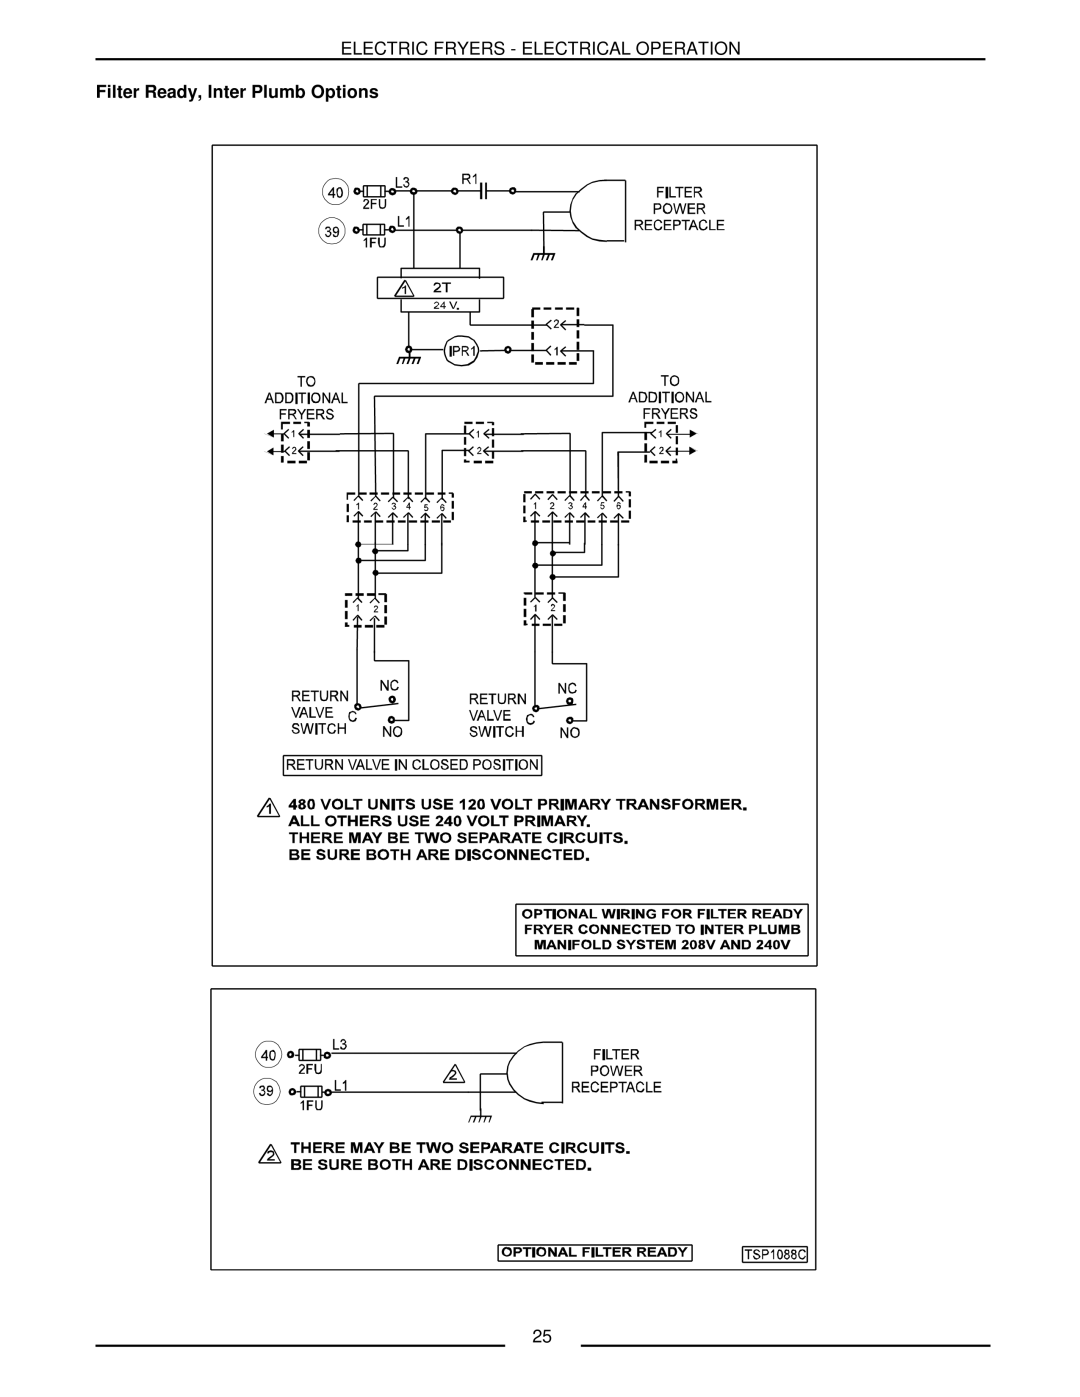 Vulcan-Hart ERD40 service manual Filter Ready, Inter Plumb Options 